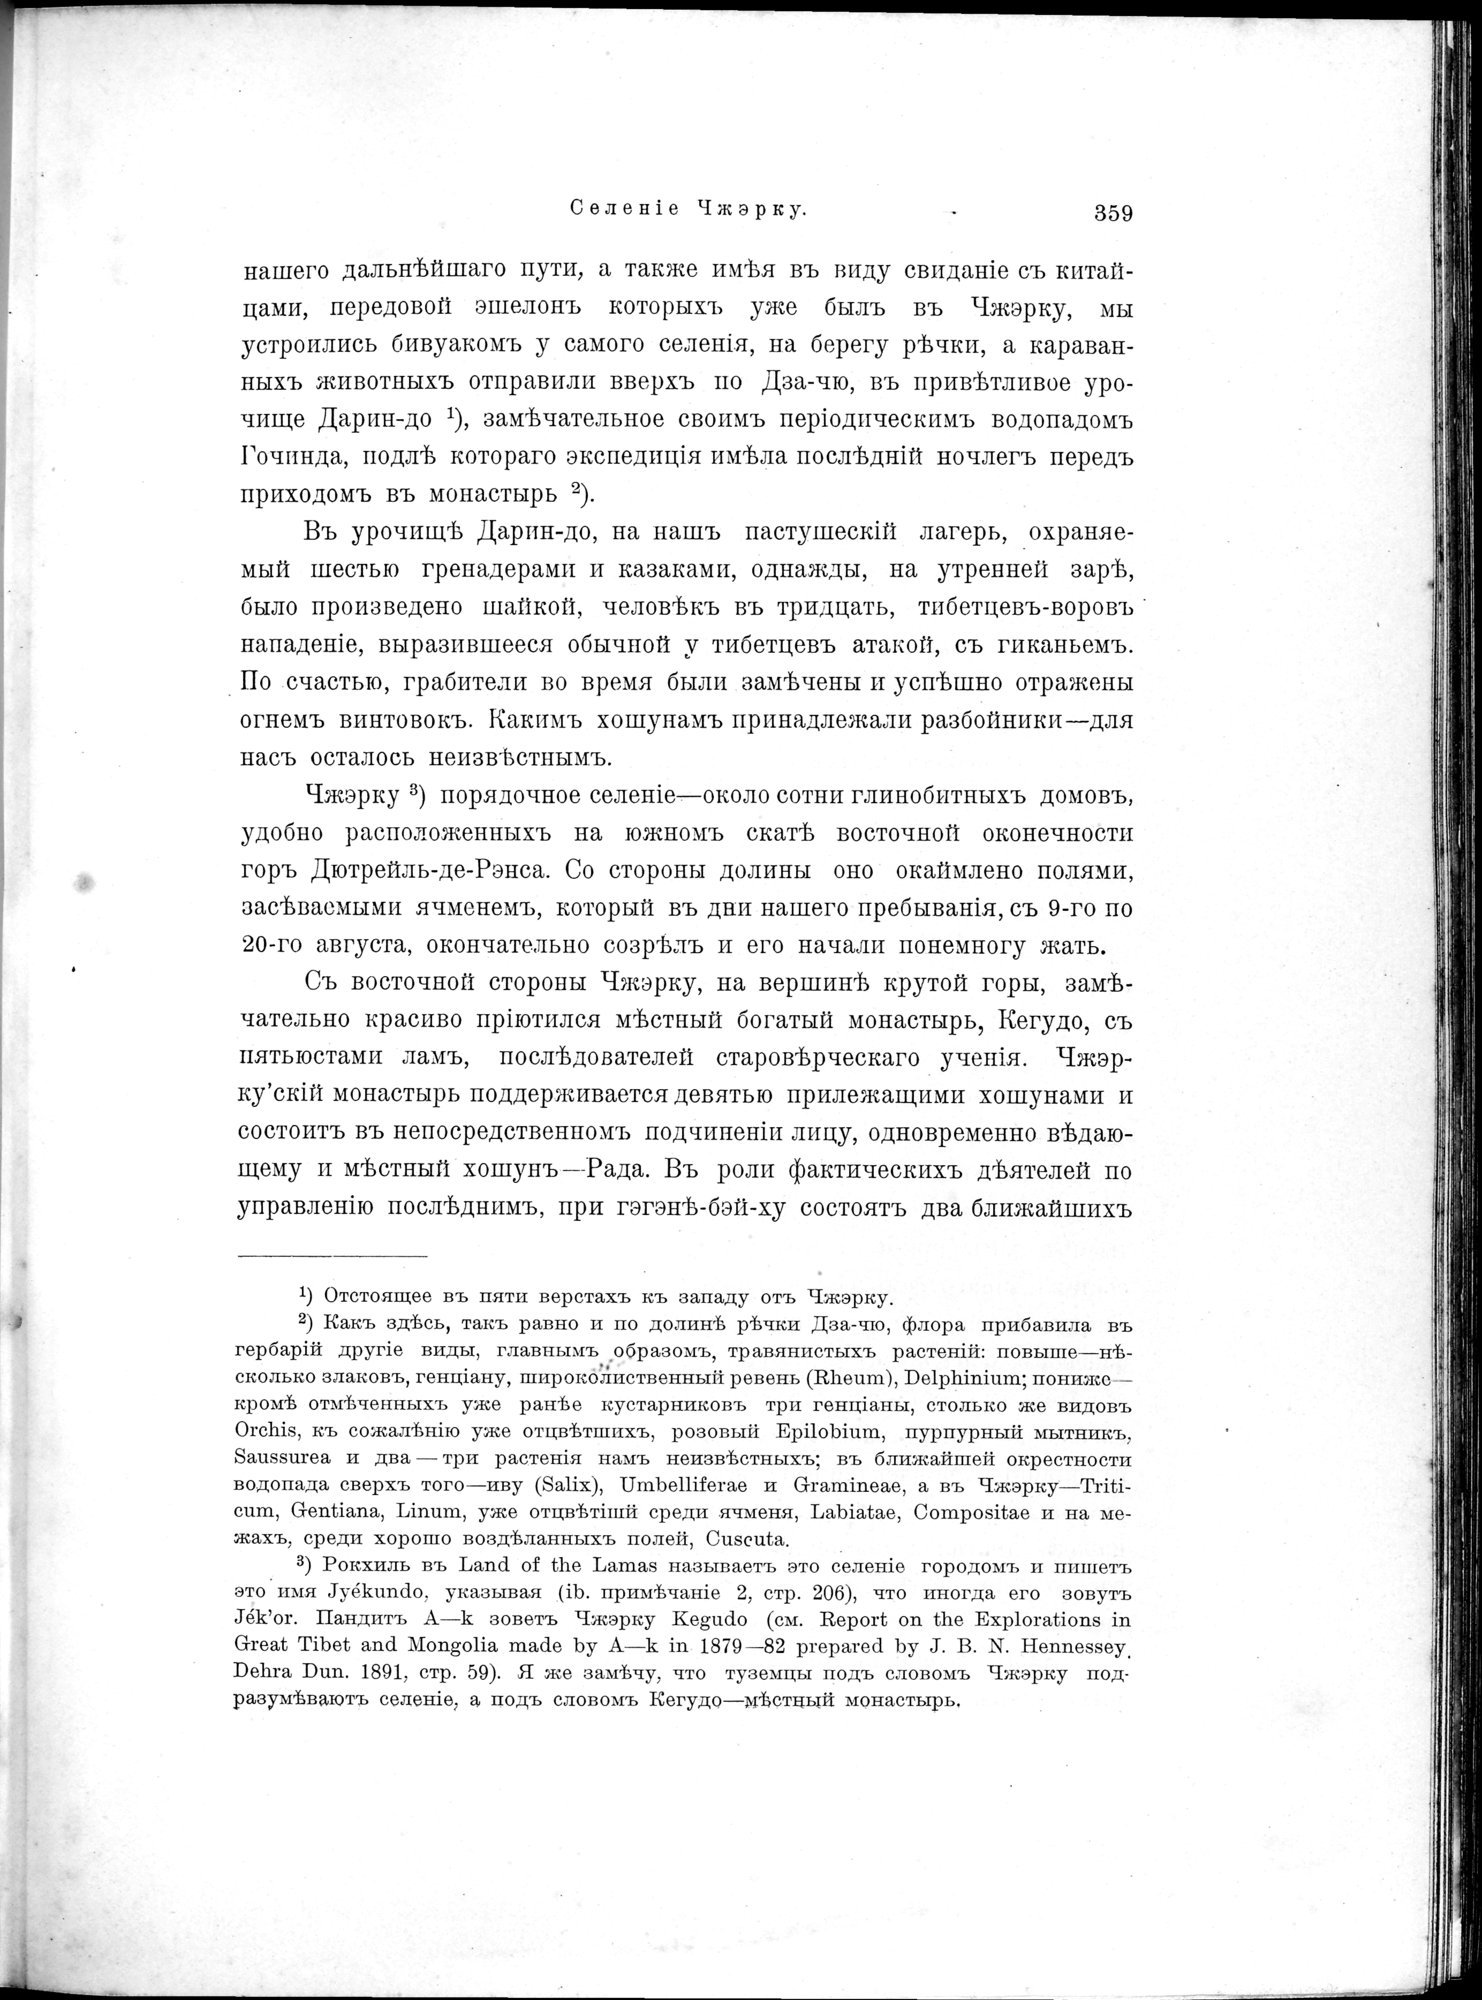 Mongoliia i Kam : vol.2 / Page 141 (Grayscale High Resolution Image)